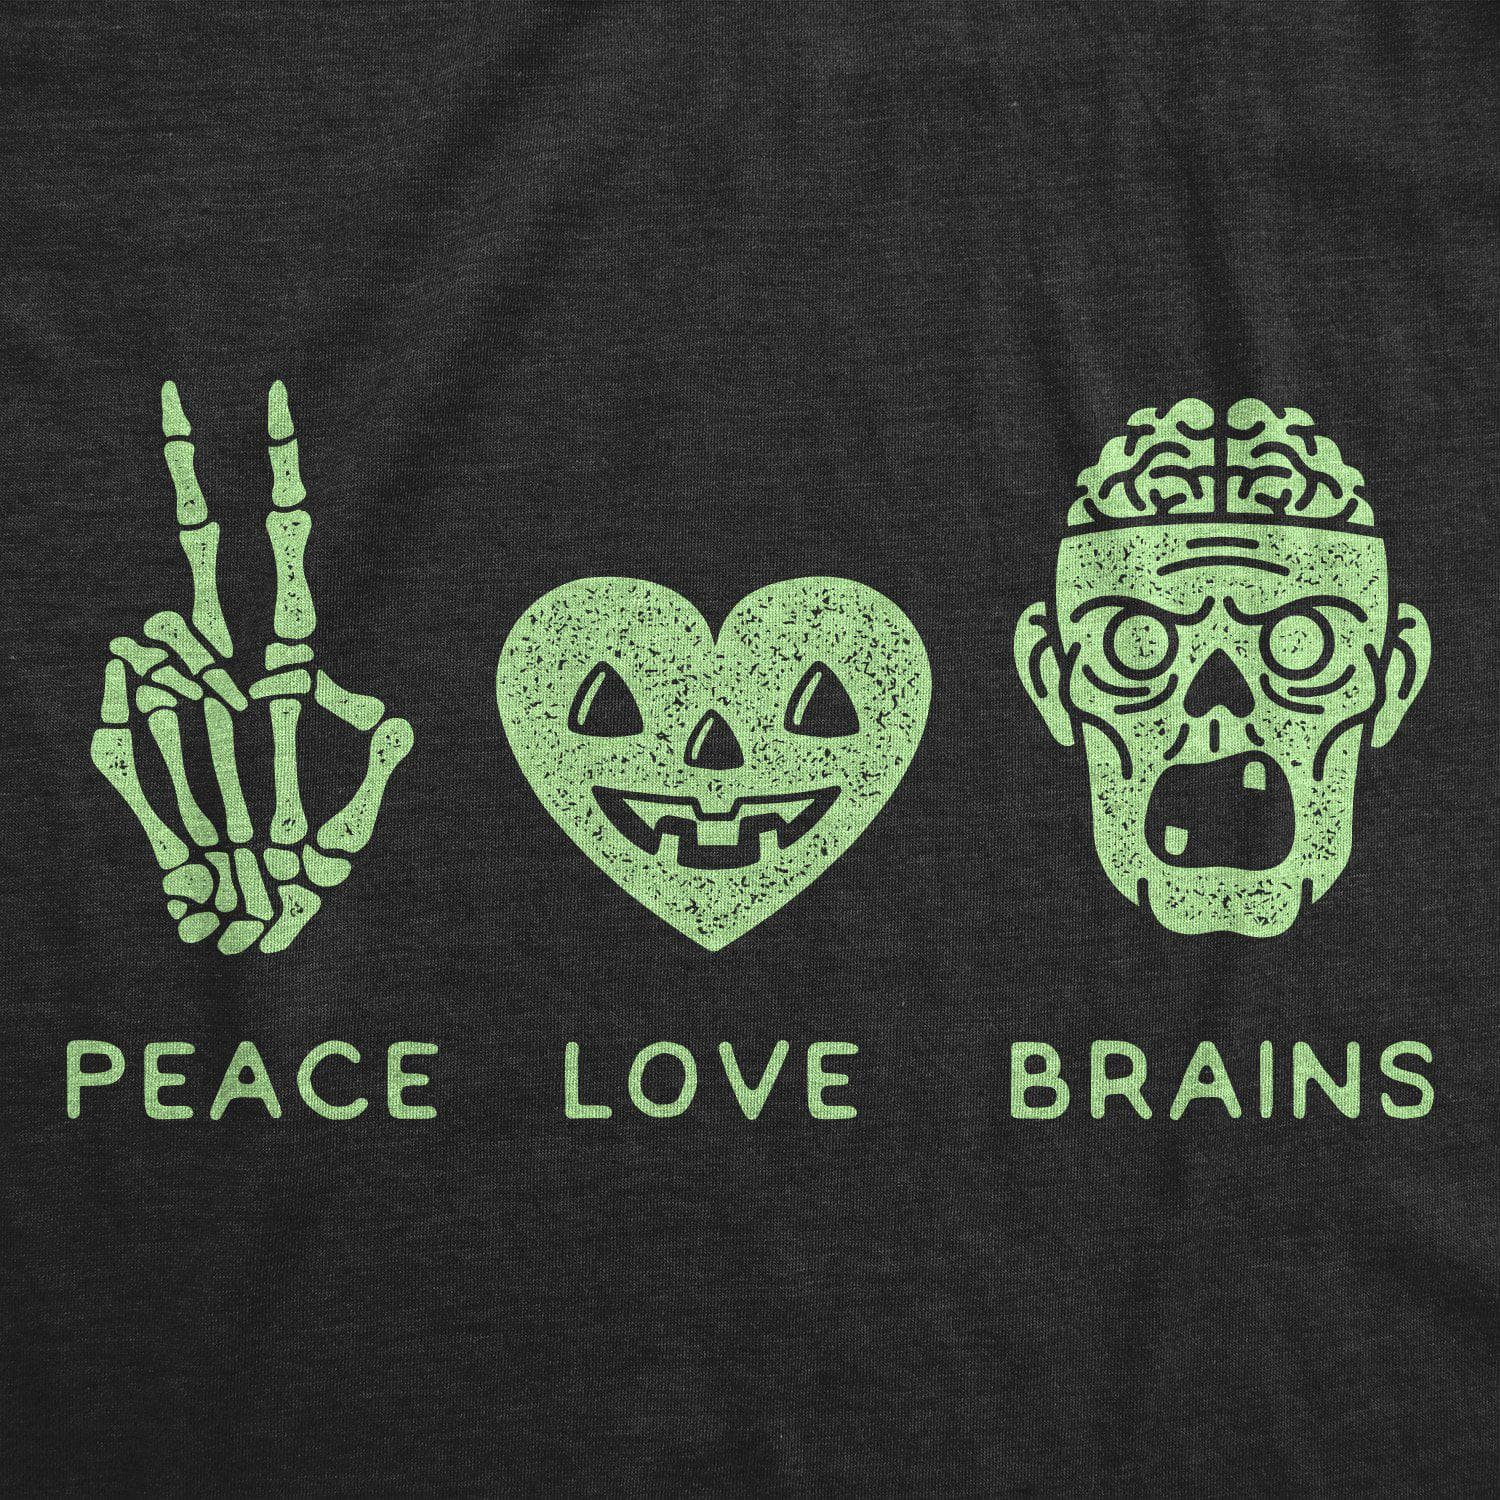 Peace Love Brains Women's Tshirt - Crazy Dog T-Shirts